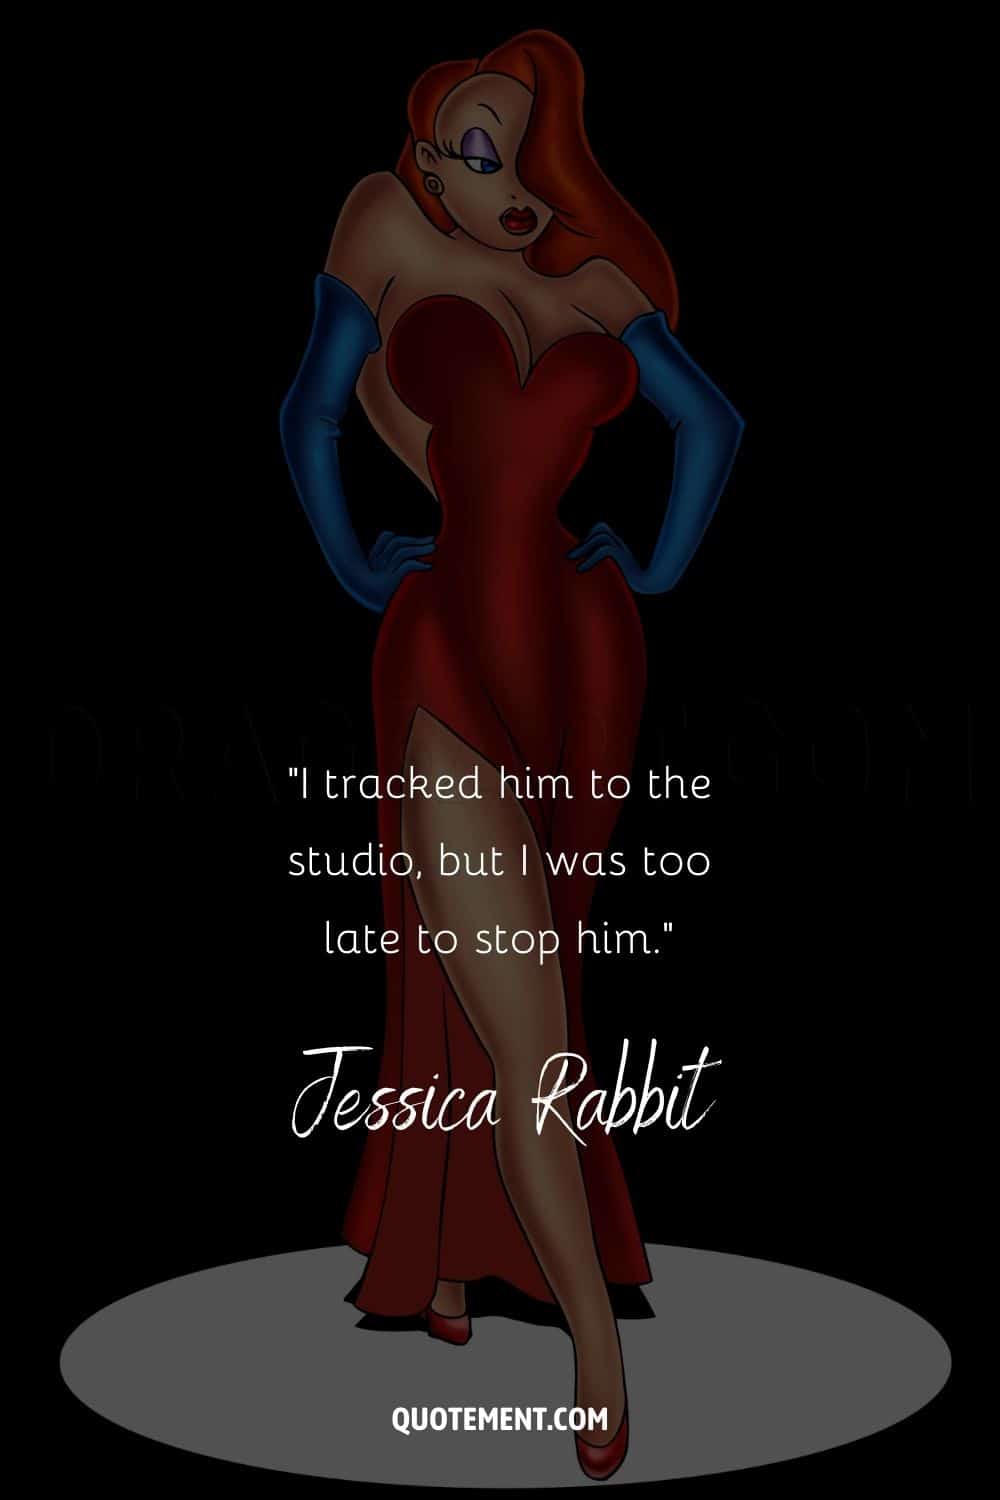 Jessica Rabbit posing representing quote by Jessica Rabbit
